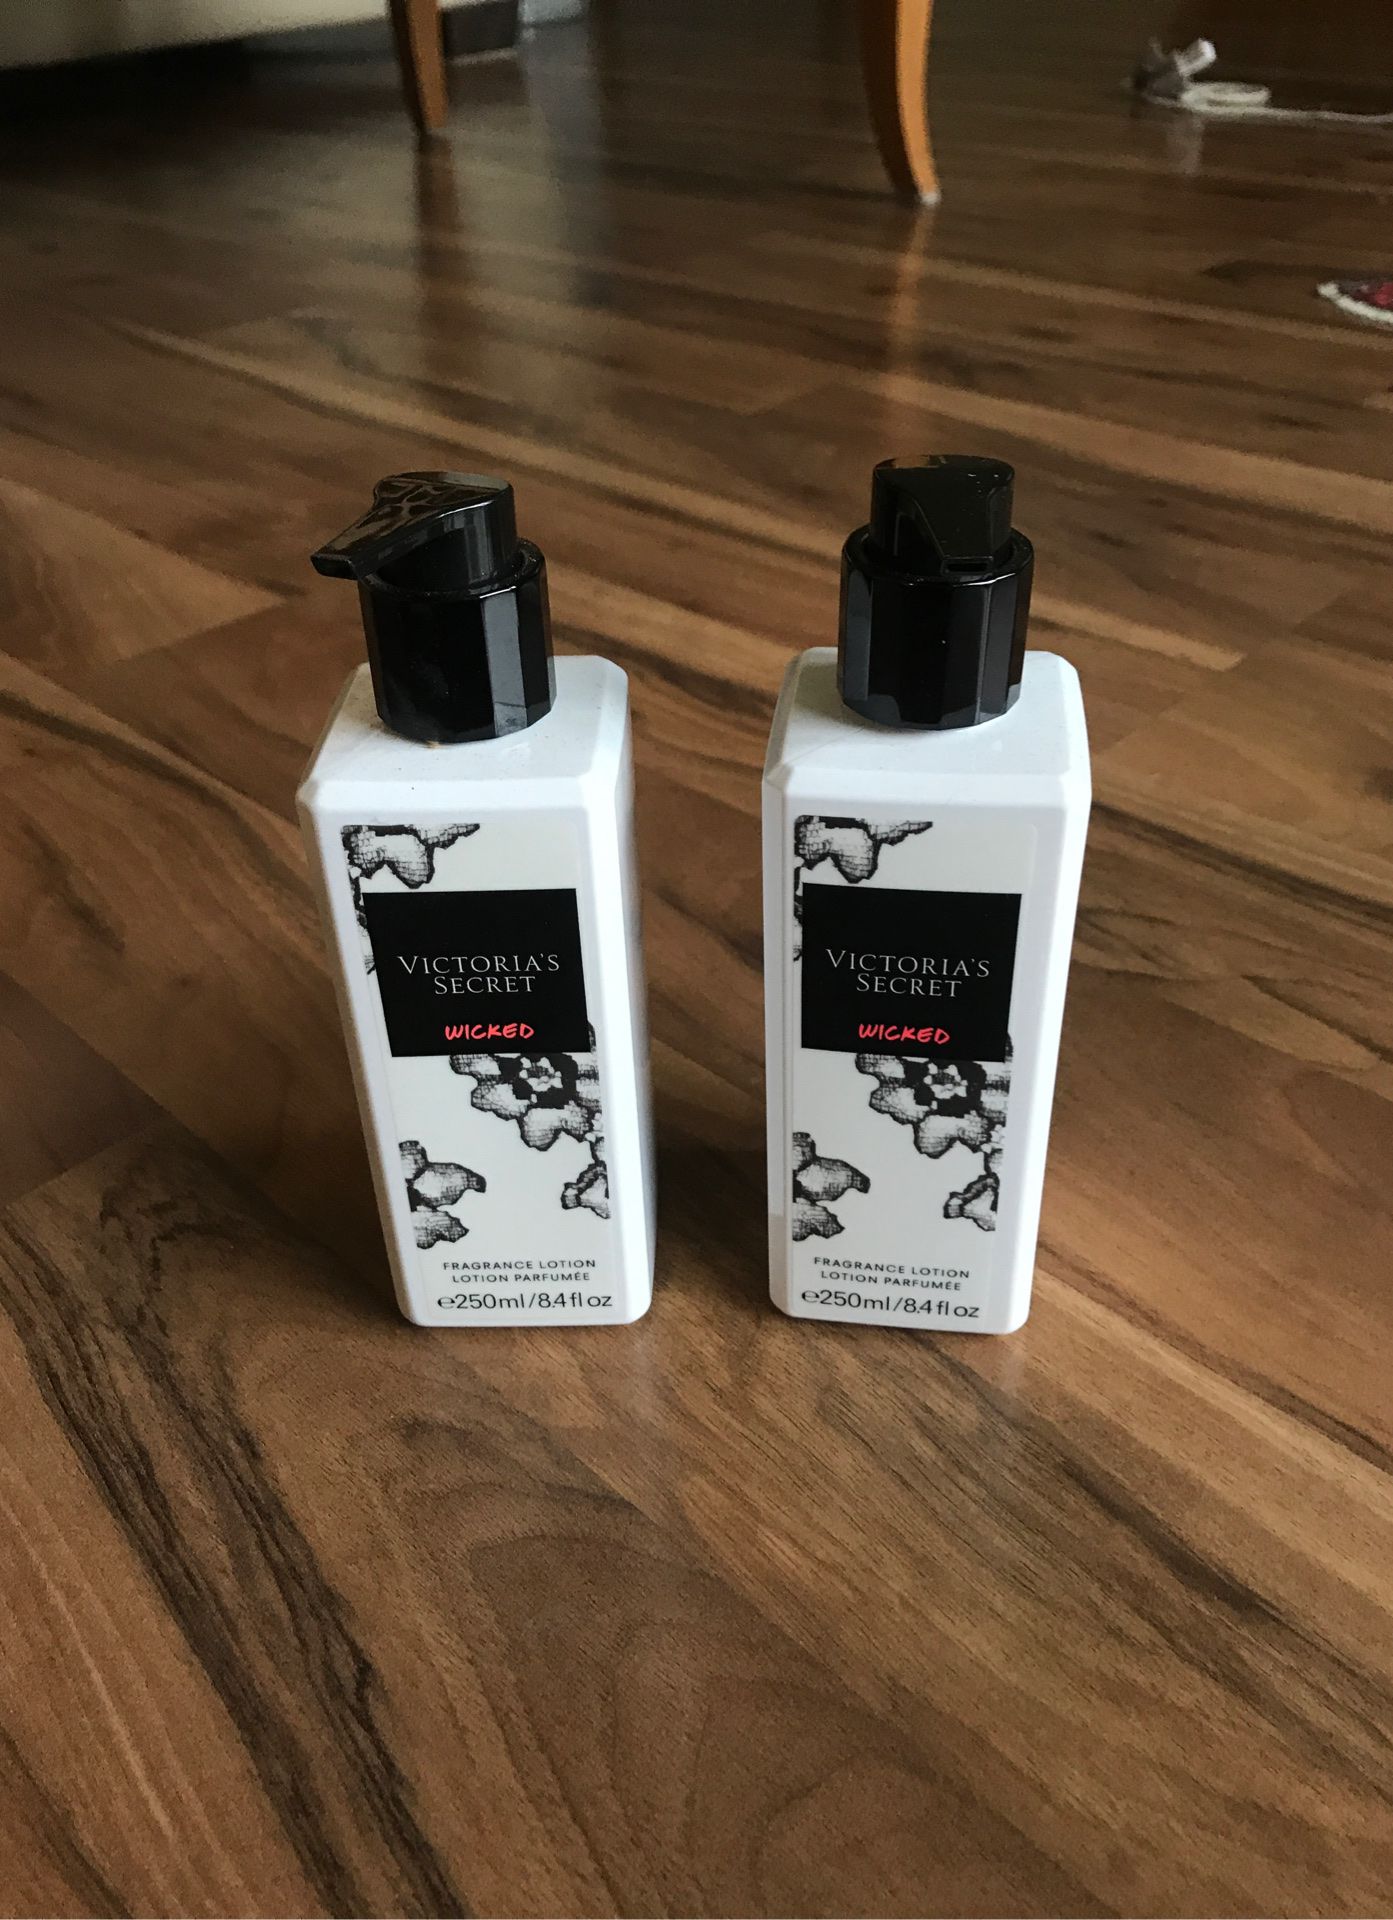 Victoria’s Secret wicked fragrance lotion 8.4 fluid ounces each